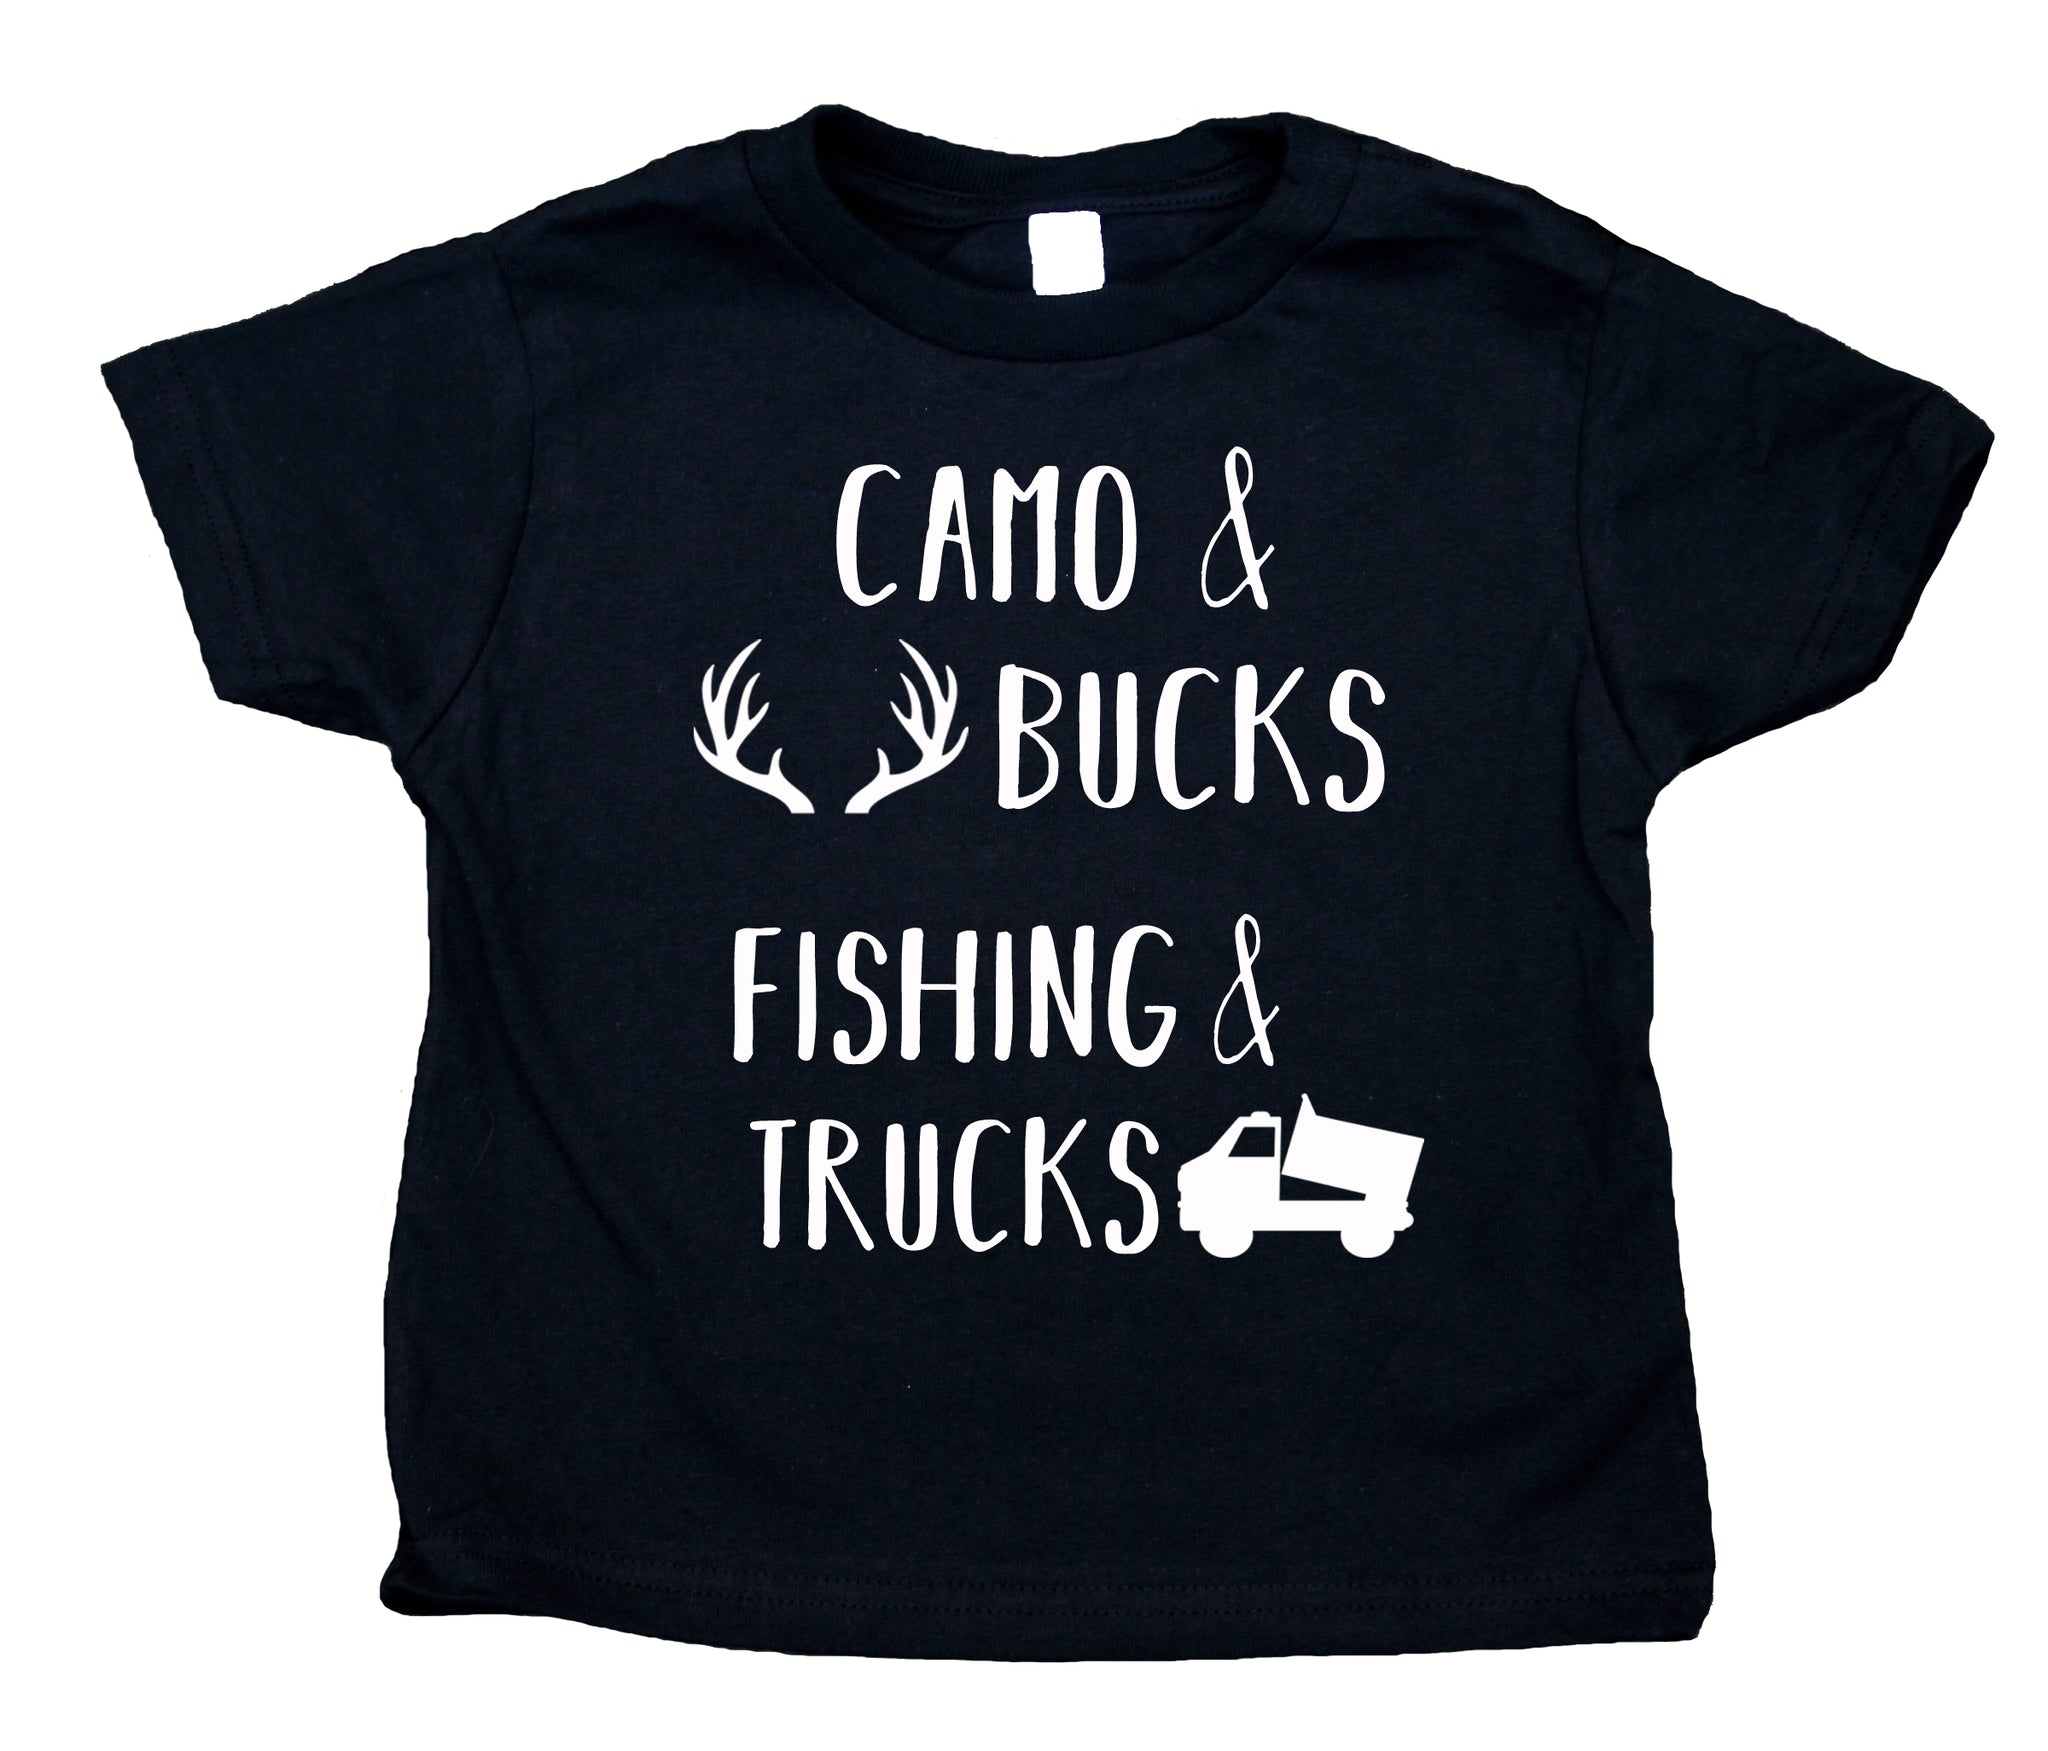 Camo and Bucks Fishing and Trucks Shirt Funny Cute Boy Clothes Kids Birthday Clothing 2T / Black